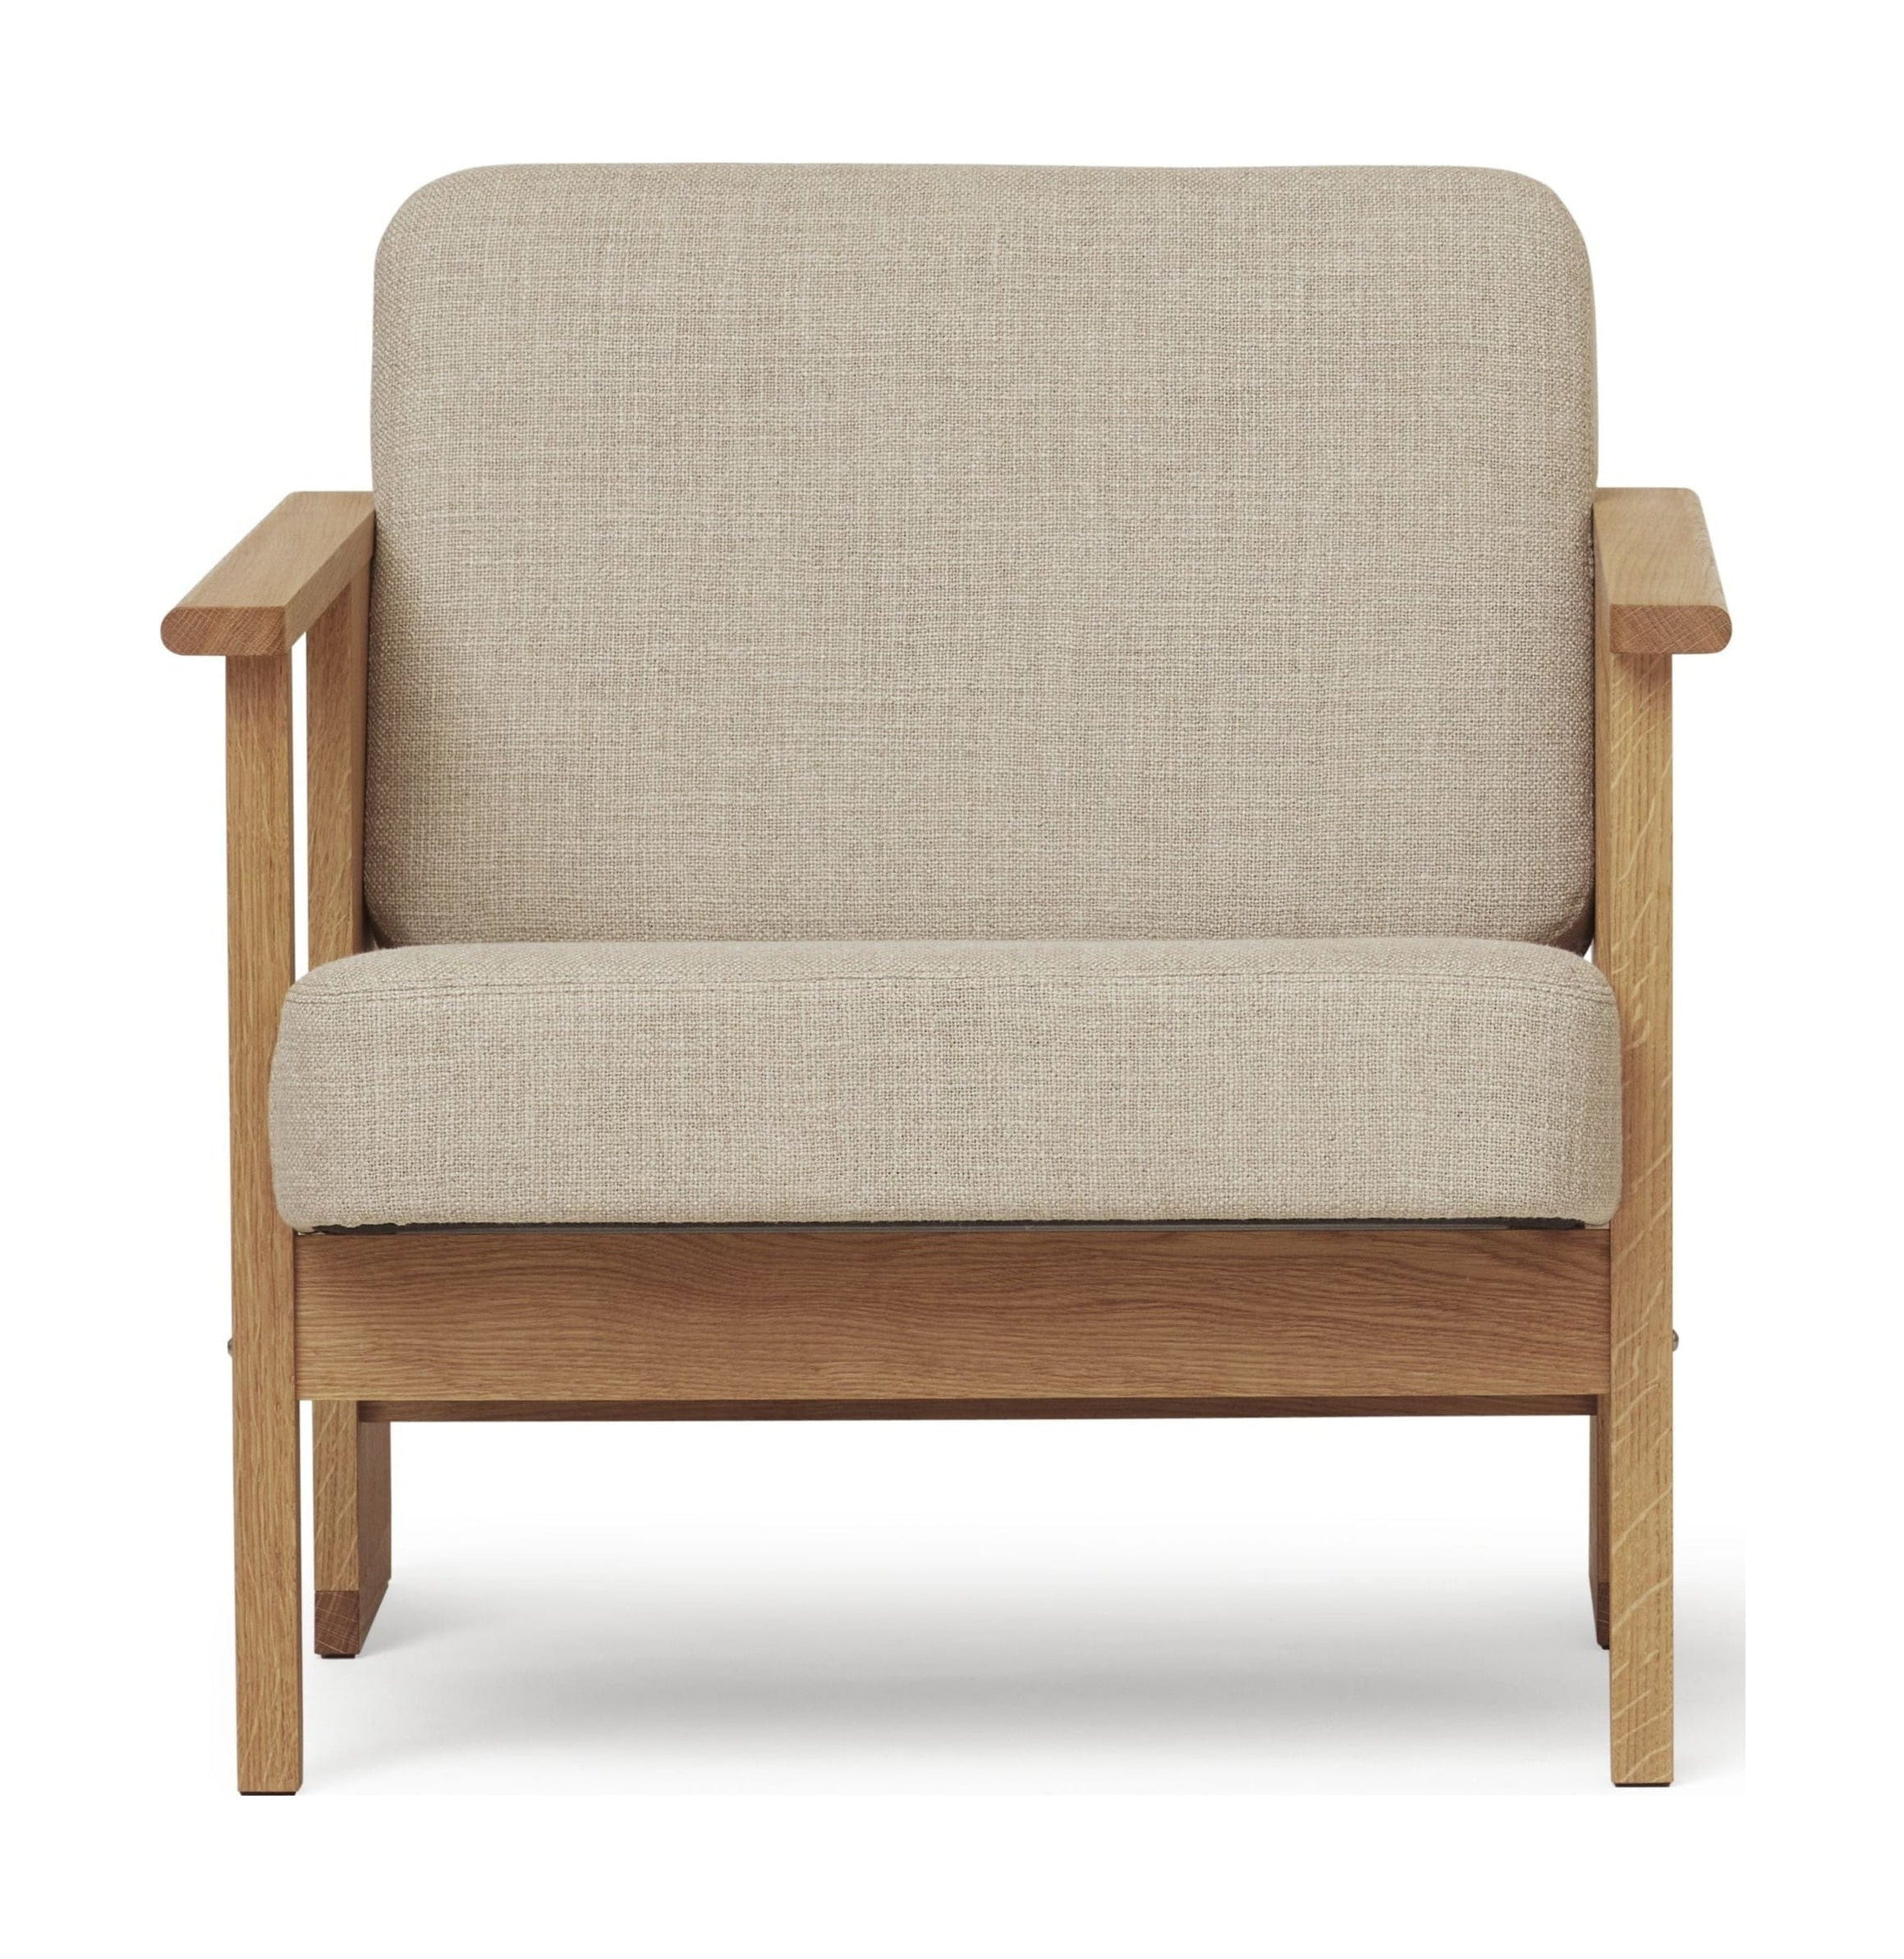 Form & Refine Block Lounge Chair. Dub